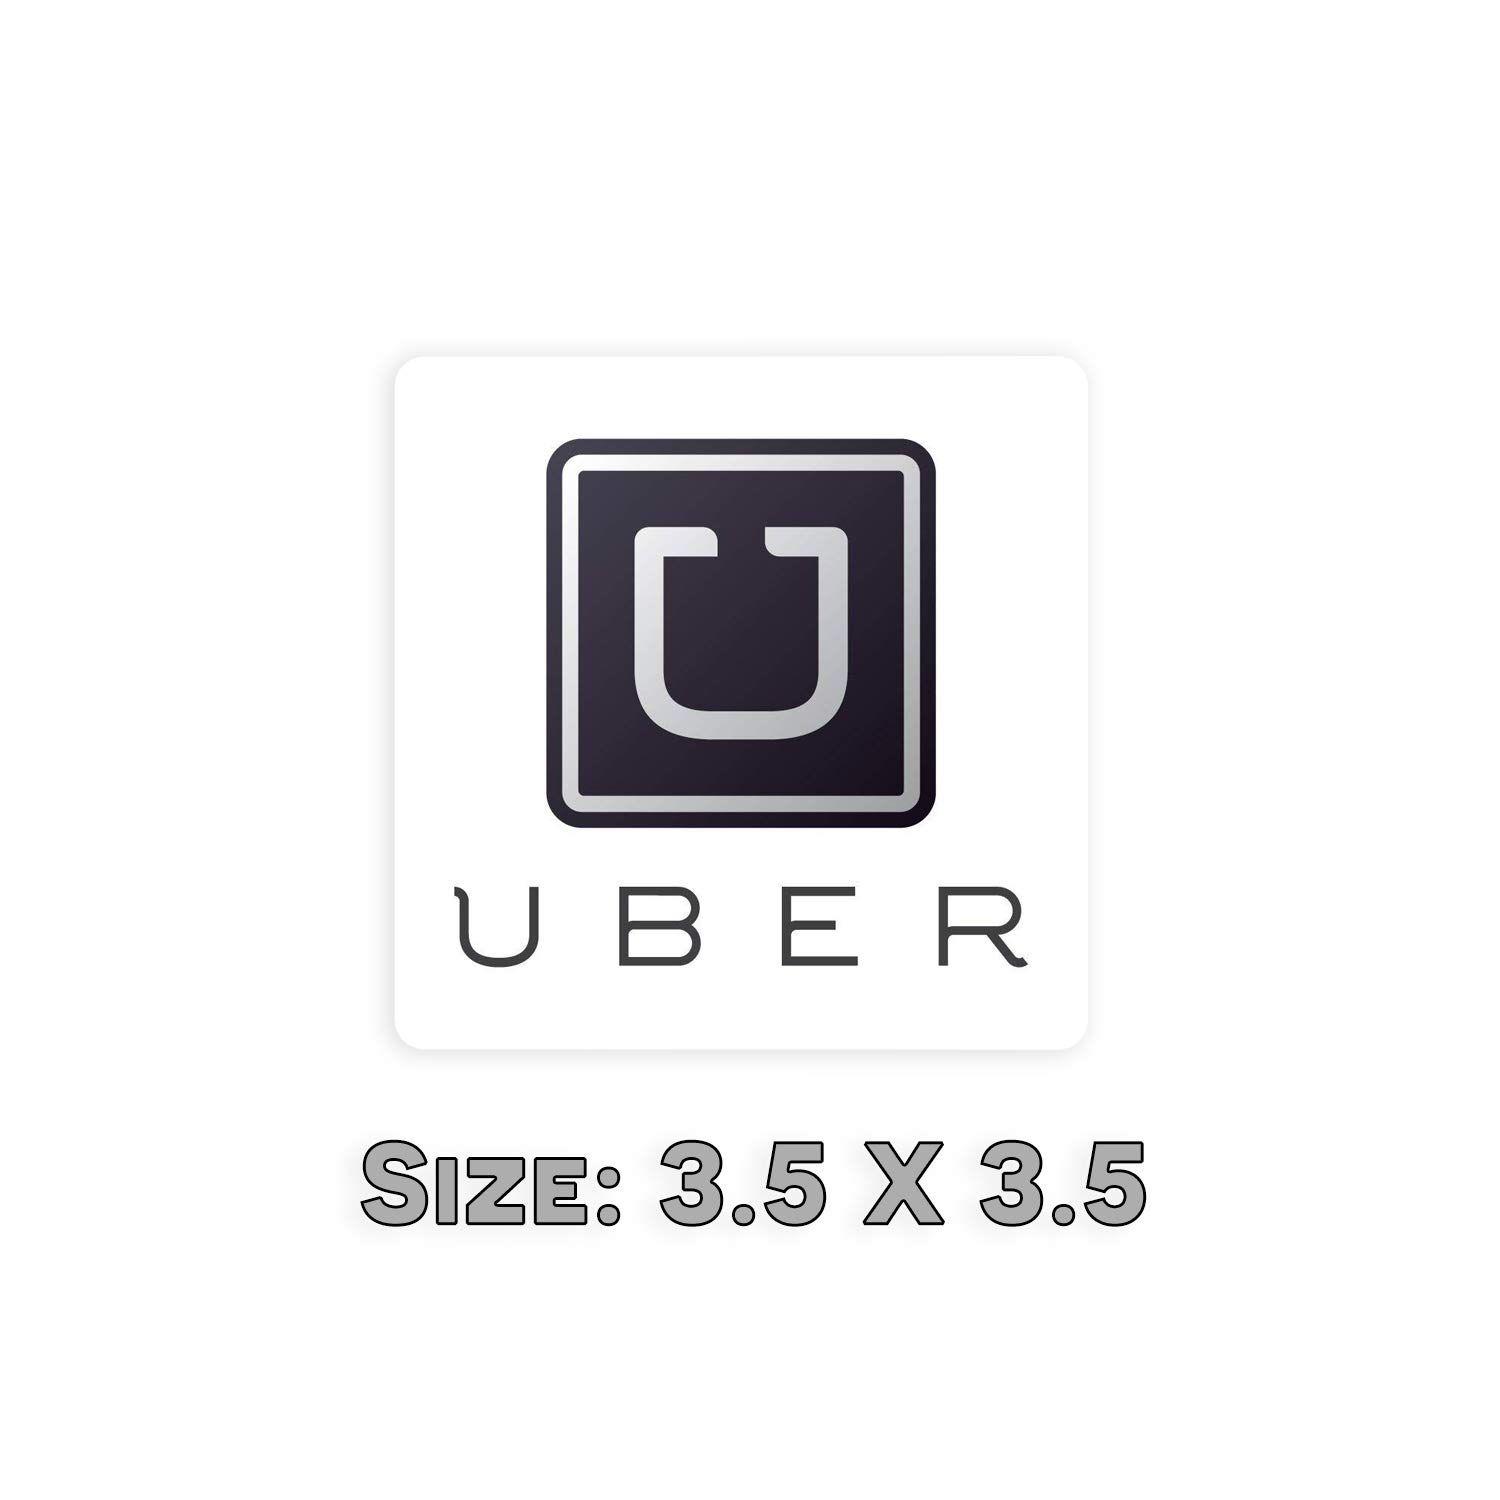 Uber Sticker Logo - UBER CAR MAGNETS 3.5 x 3.5 inches White Vehicle Magnet